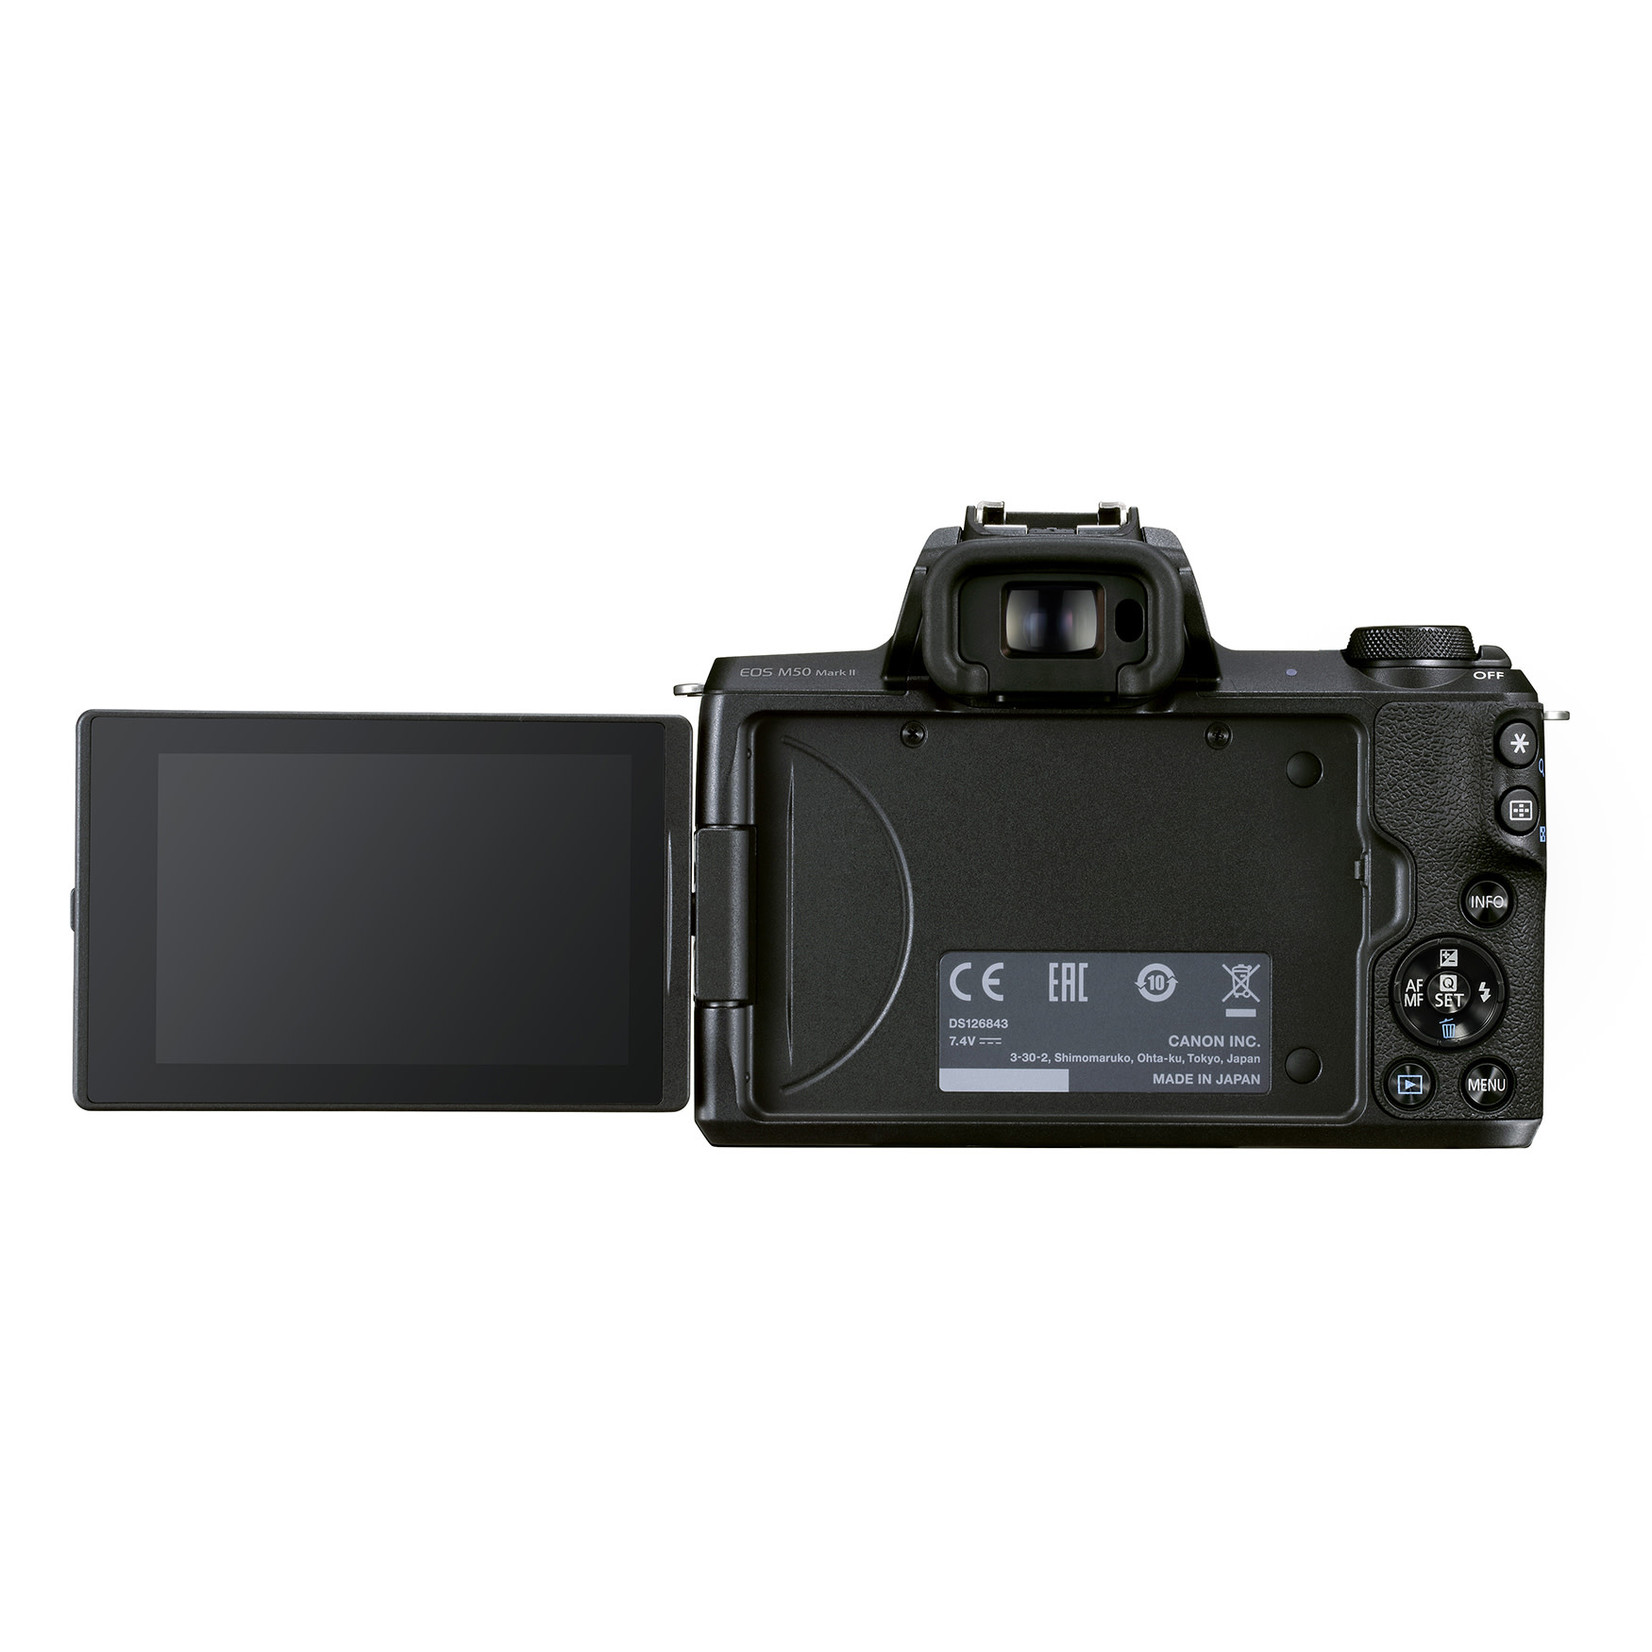 Canon EOS M50 Mark II EF-M 15-45mm IS STM Kit Black